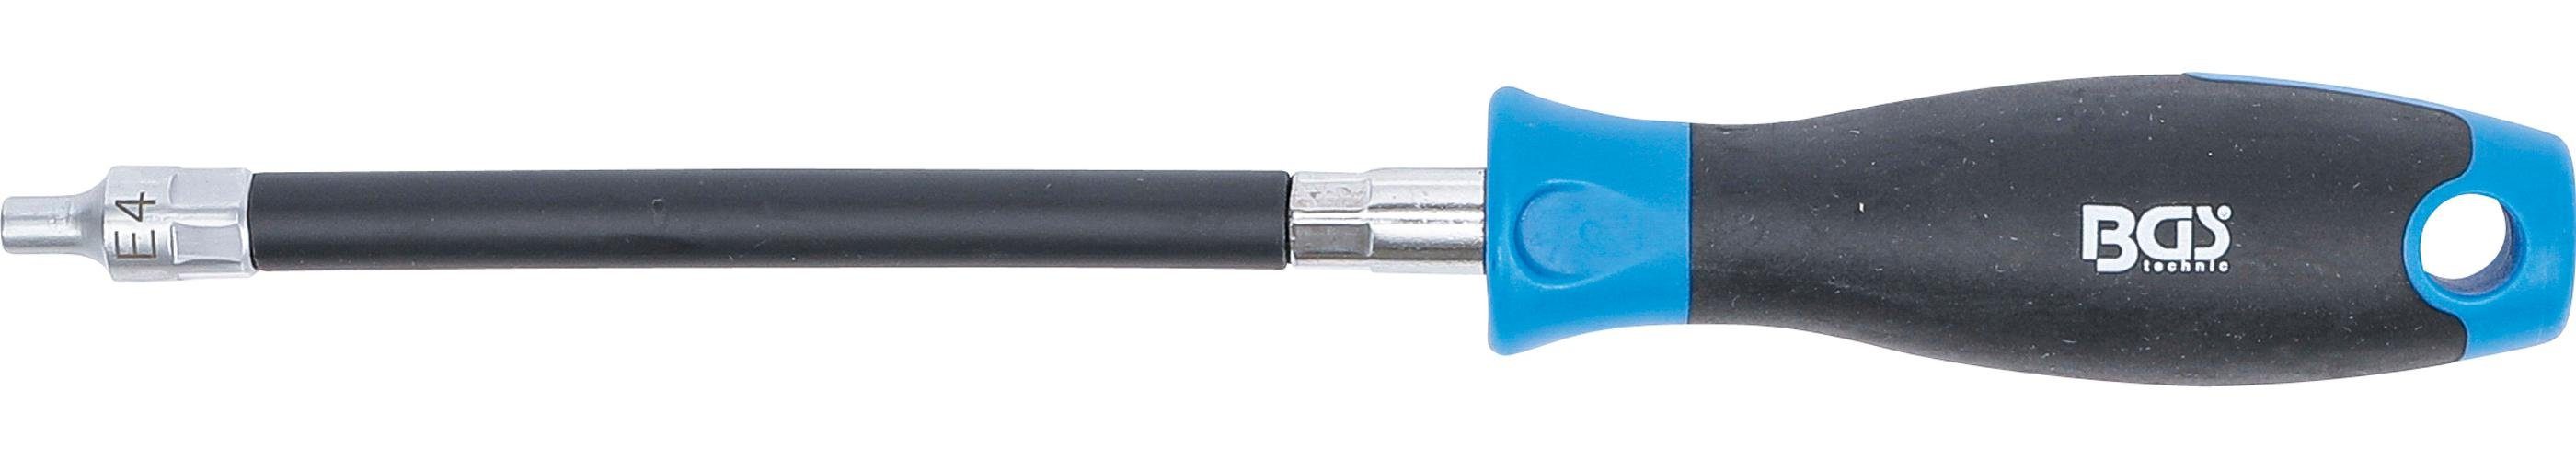 Flexibler mm 150 Klingenlänge Schraubendreher Steckschlüssel E4, Rundgriff, BGS E-Profil technic mit